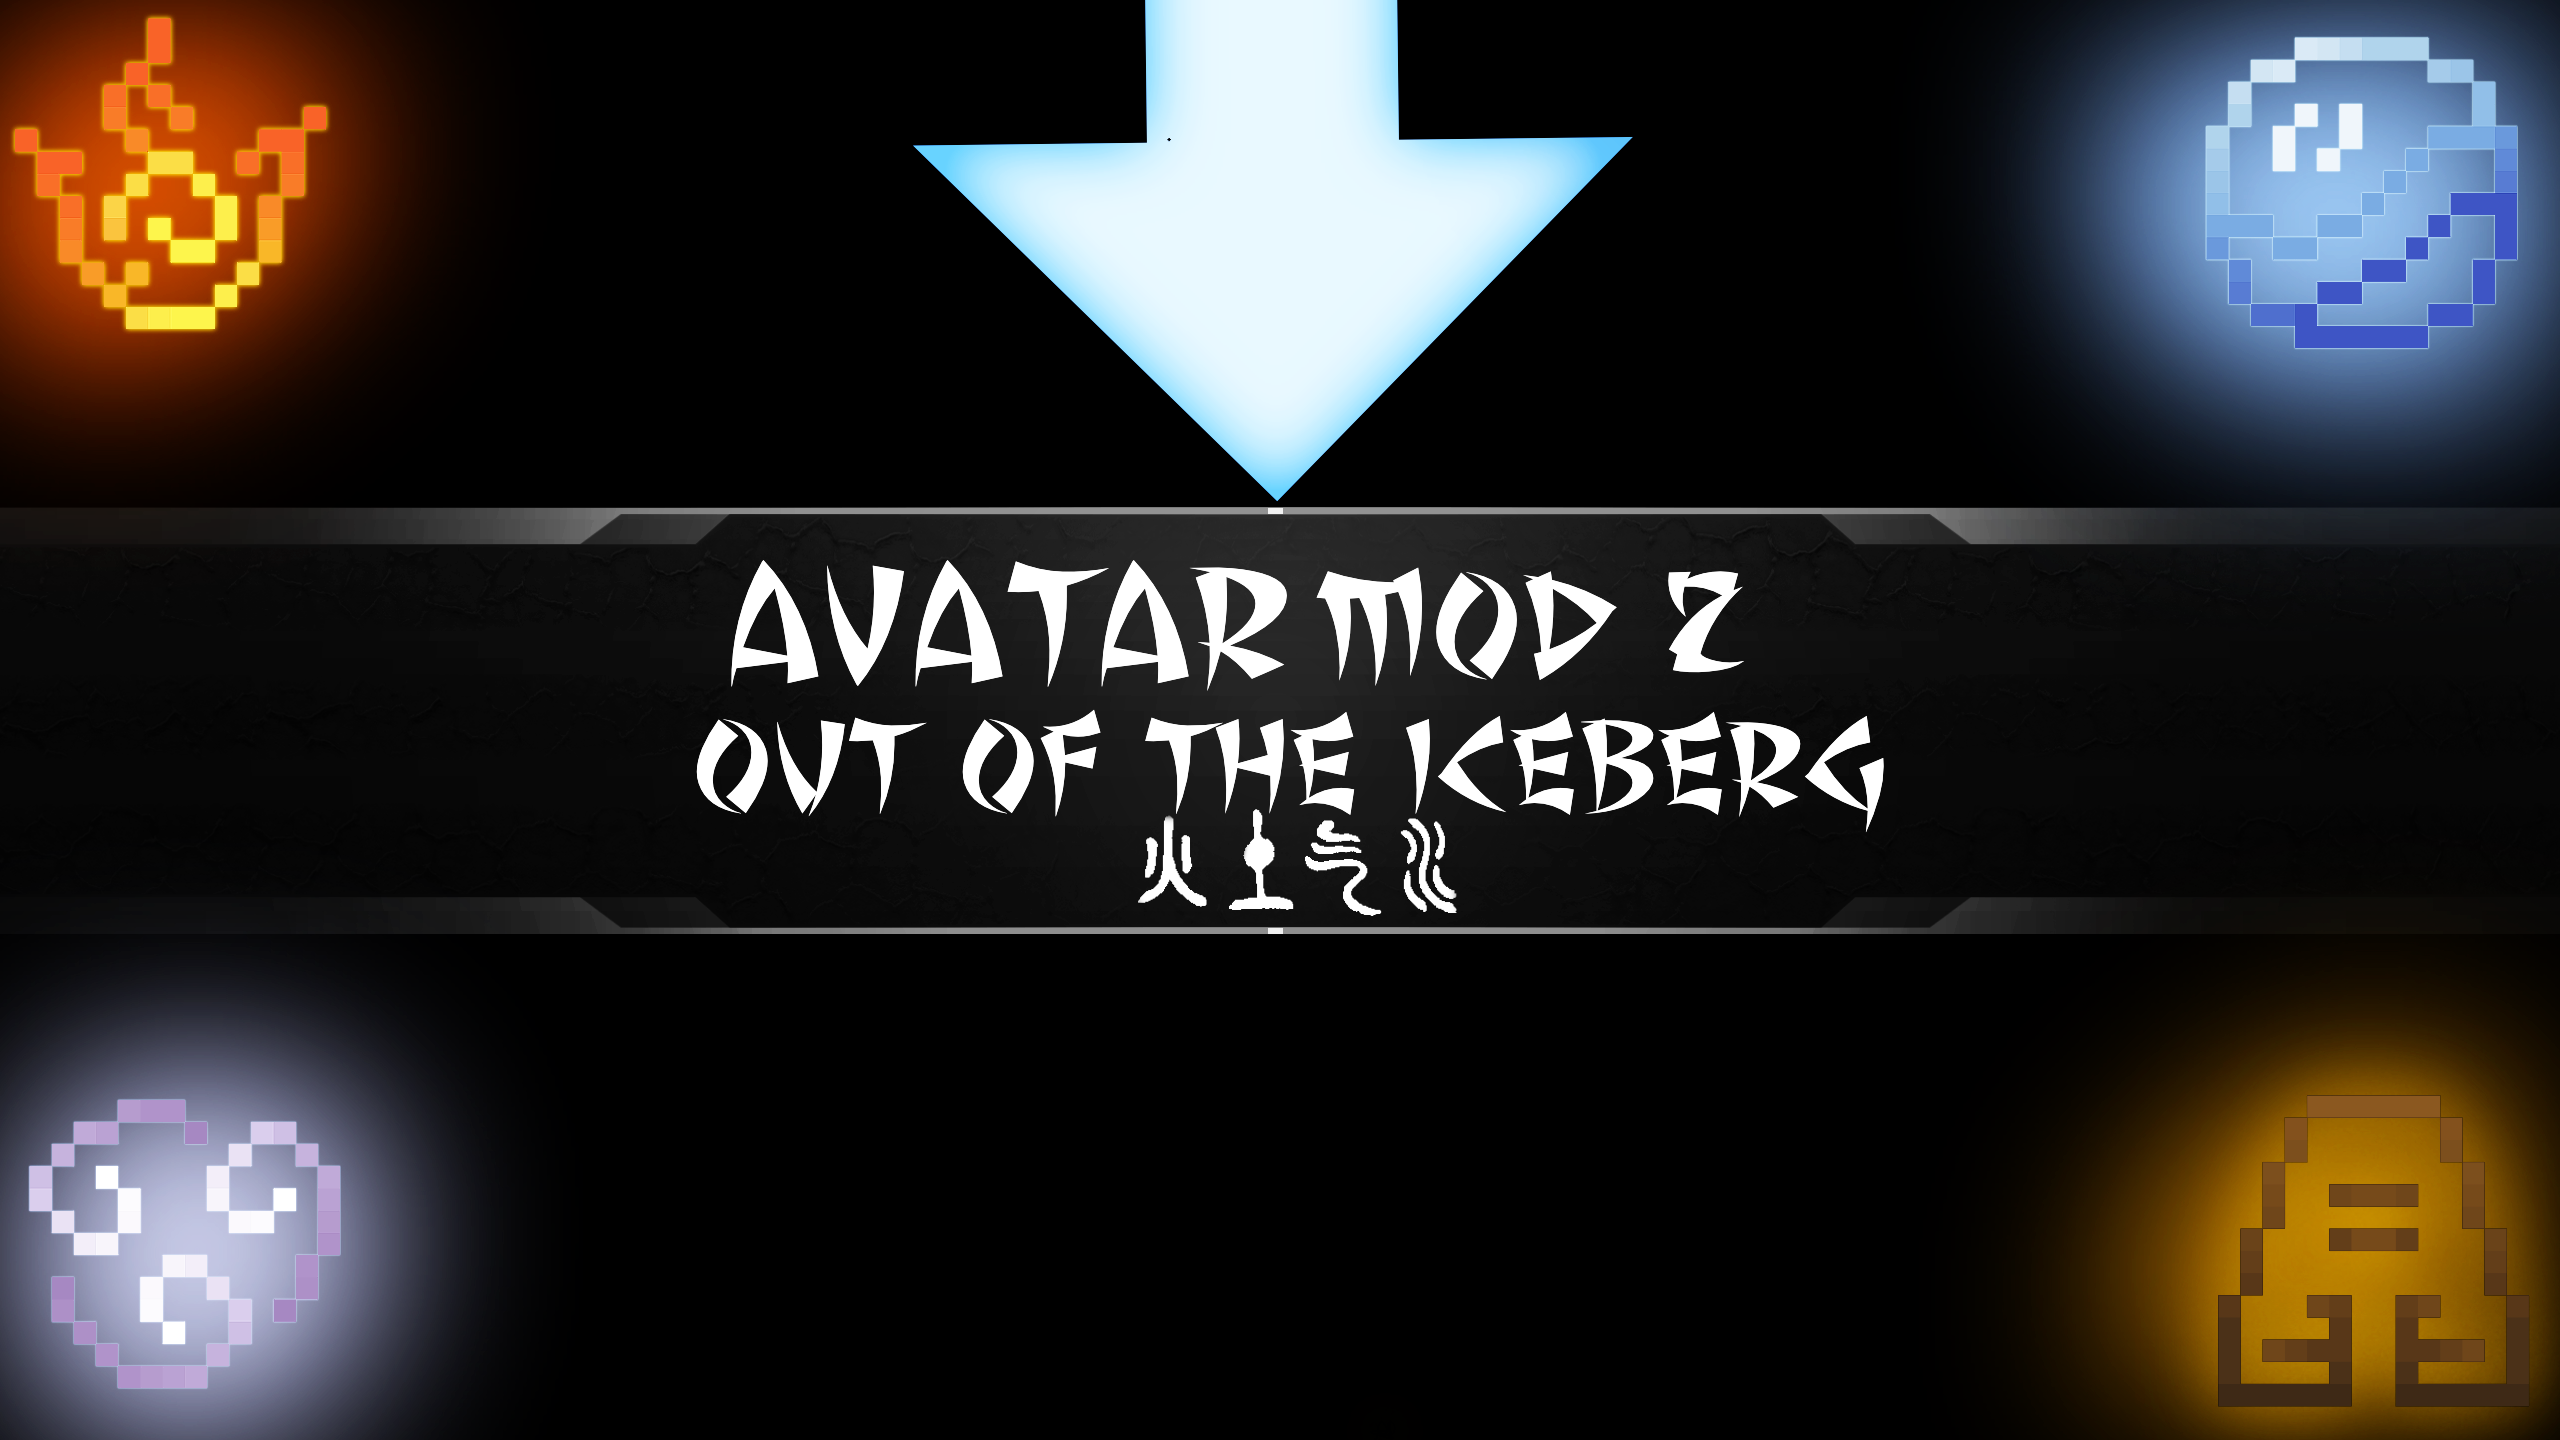 BECOMING THE AVATAR  BendersMC  Episode 1 Minecraft Avatar The Last Airbender  Server  YouTube